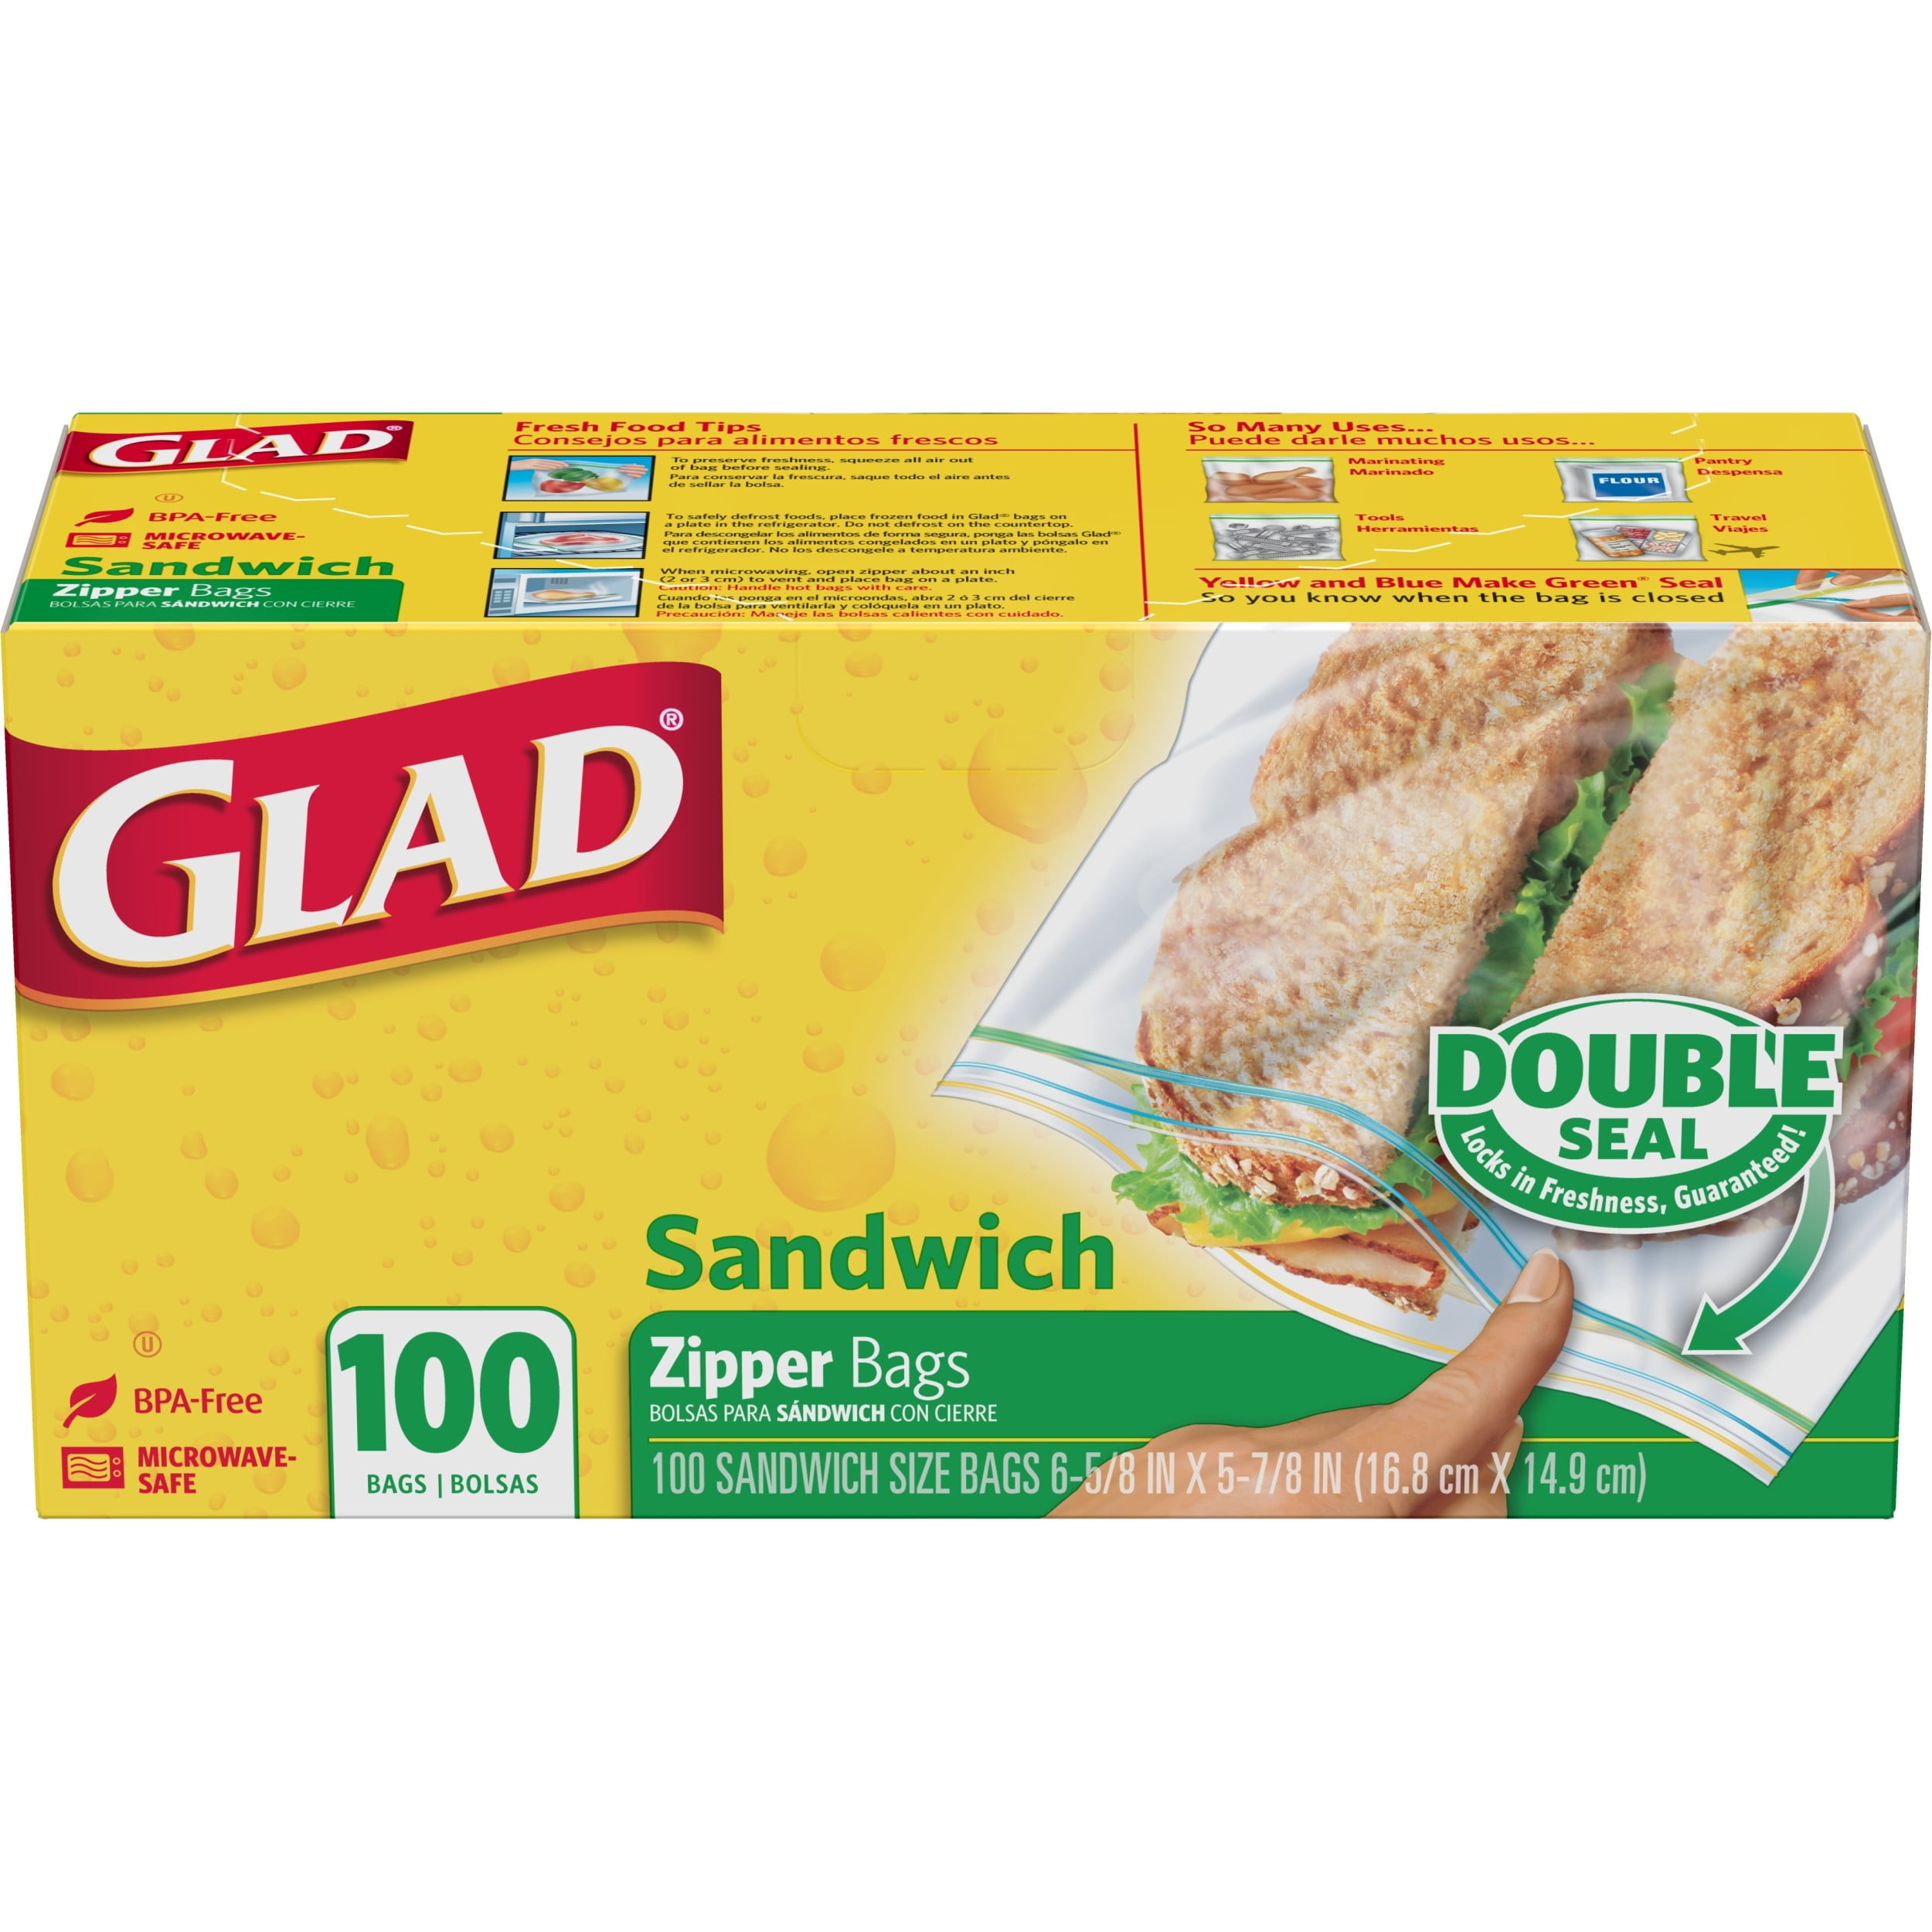 ZIPLOC/GLAD, snack - standard box